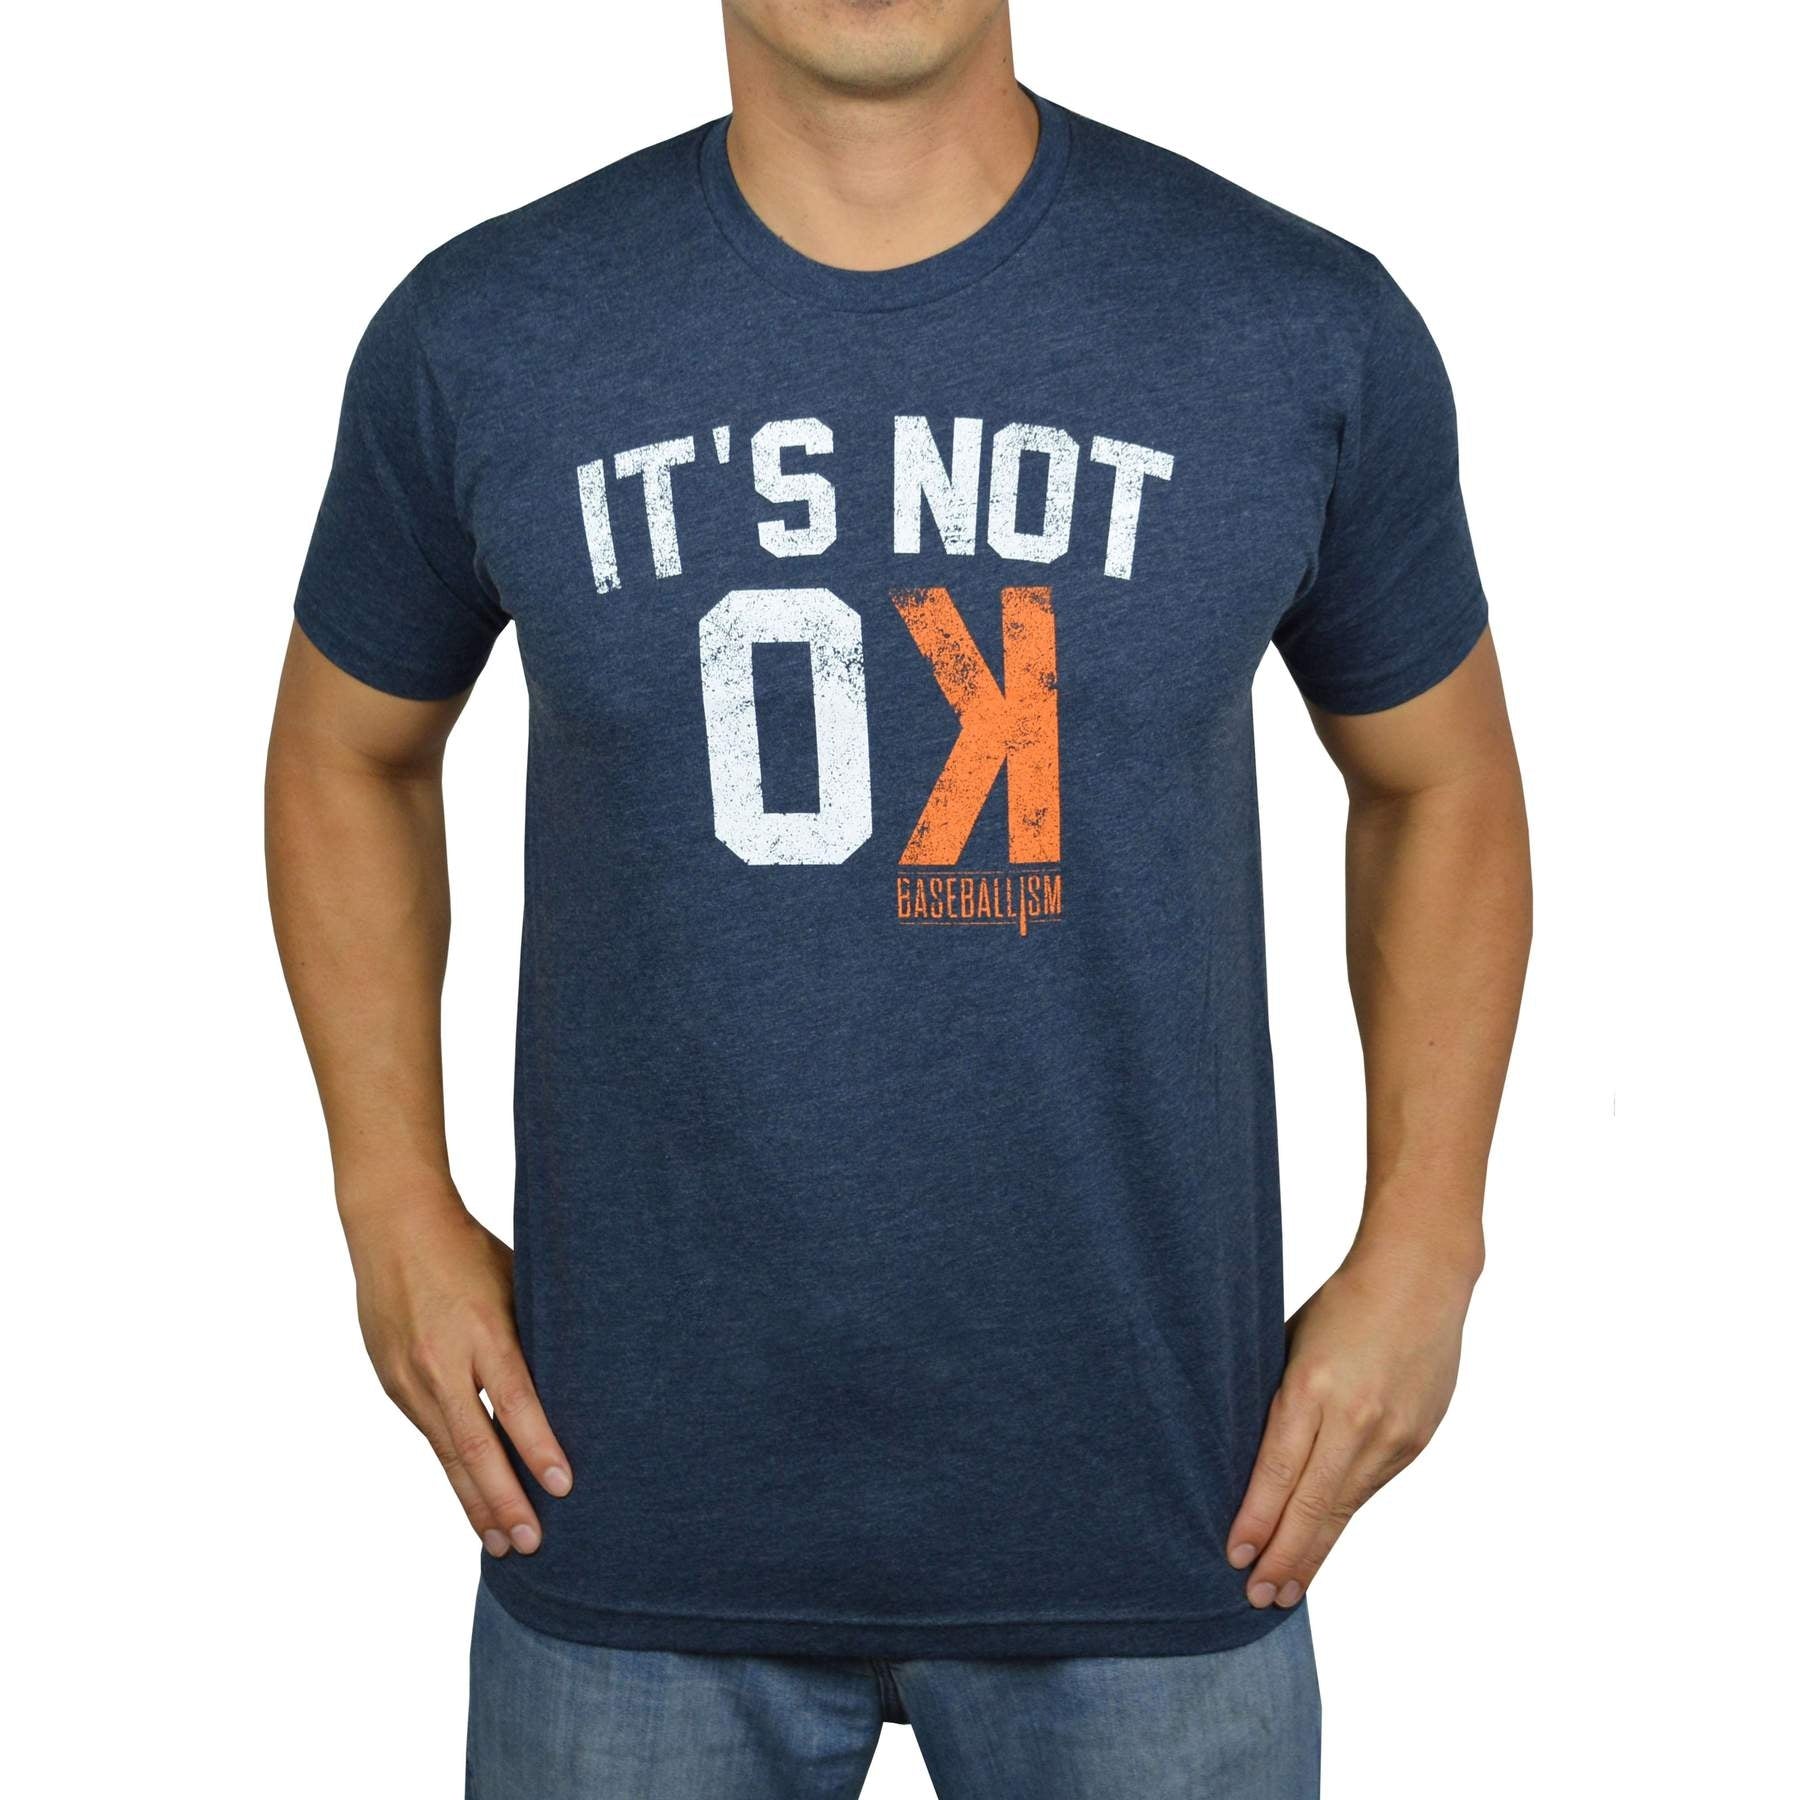 Baseballism - Not OK - Navy T-Shirt (Men's)